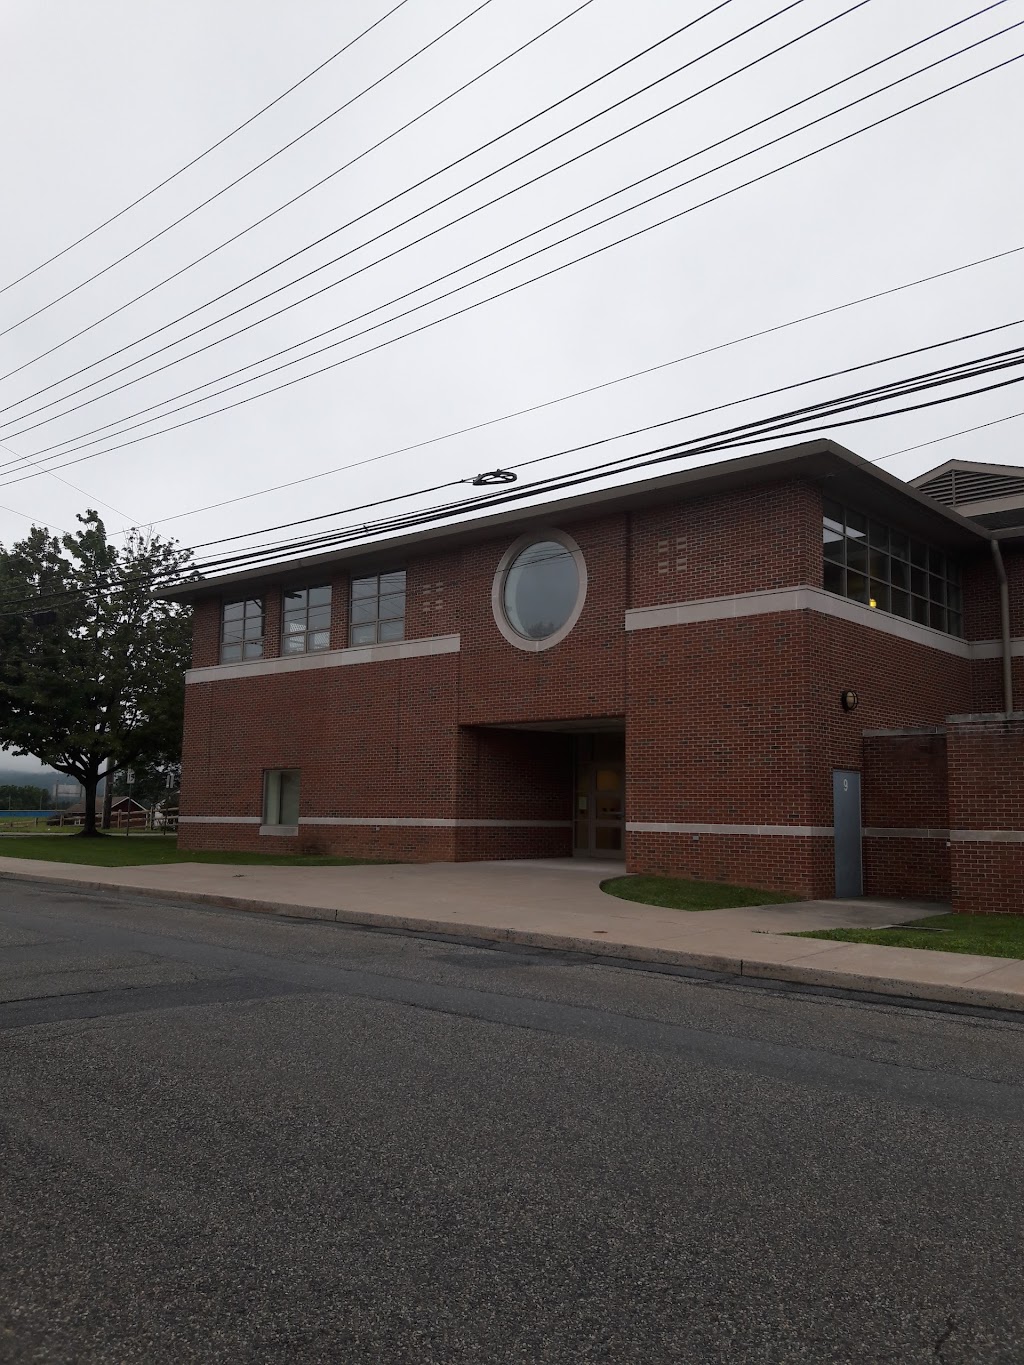 Avona Elementary School | 2317 Front St, Easton, PA 18042 | Phone: (484) 373-6250